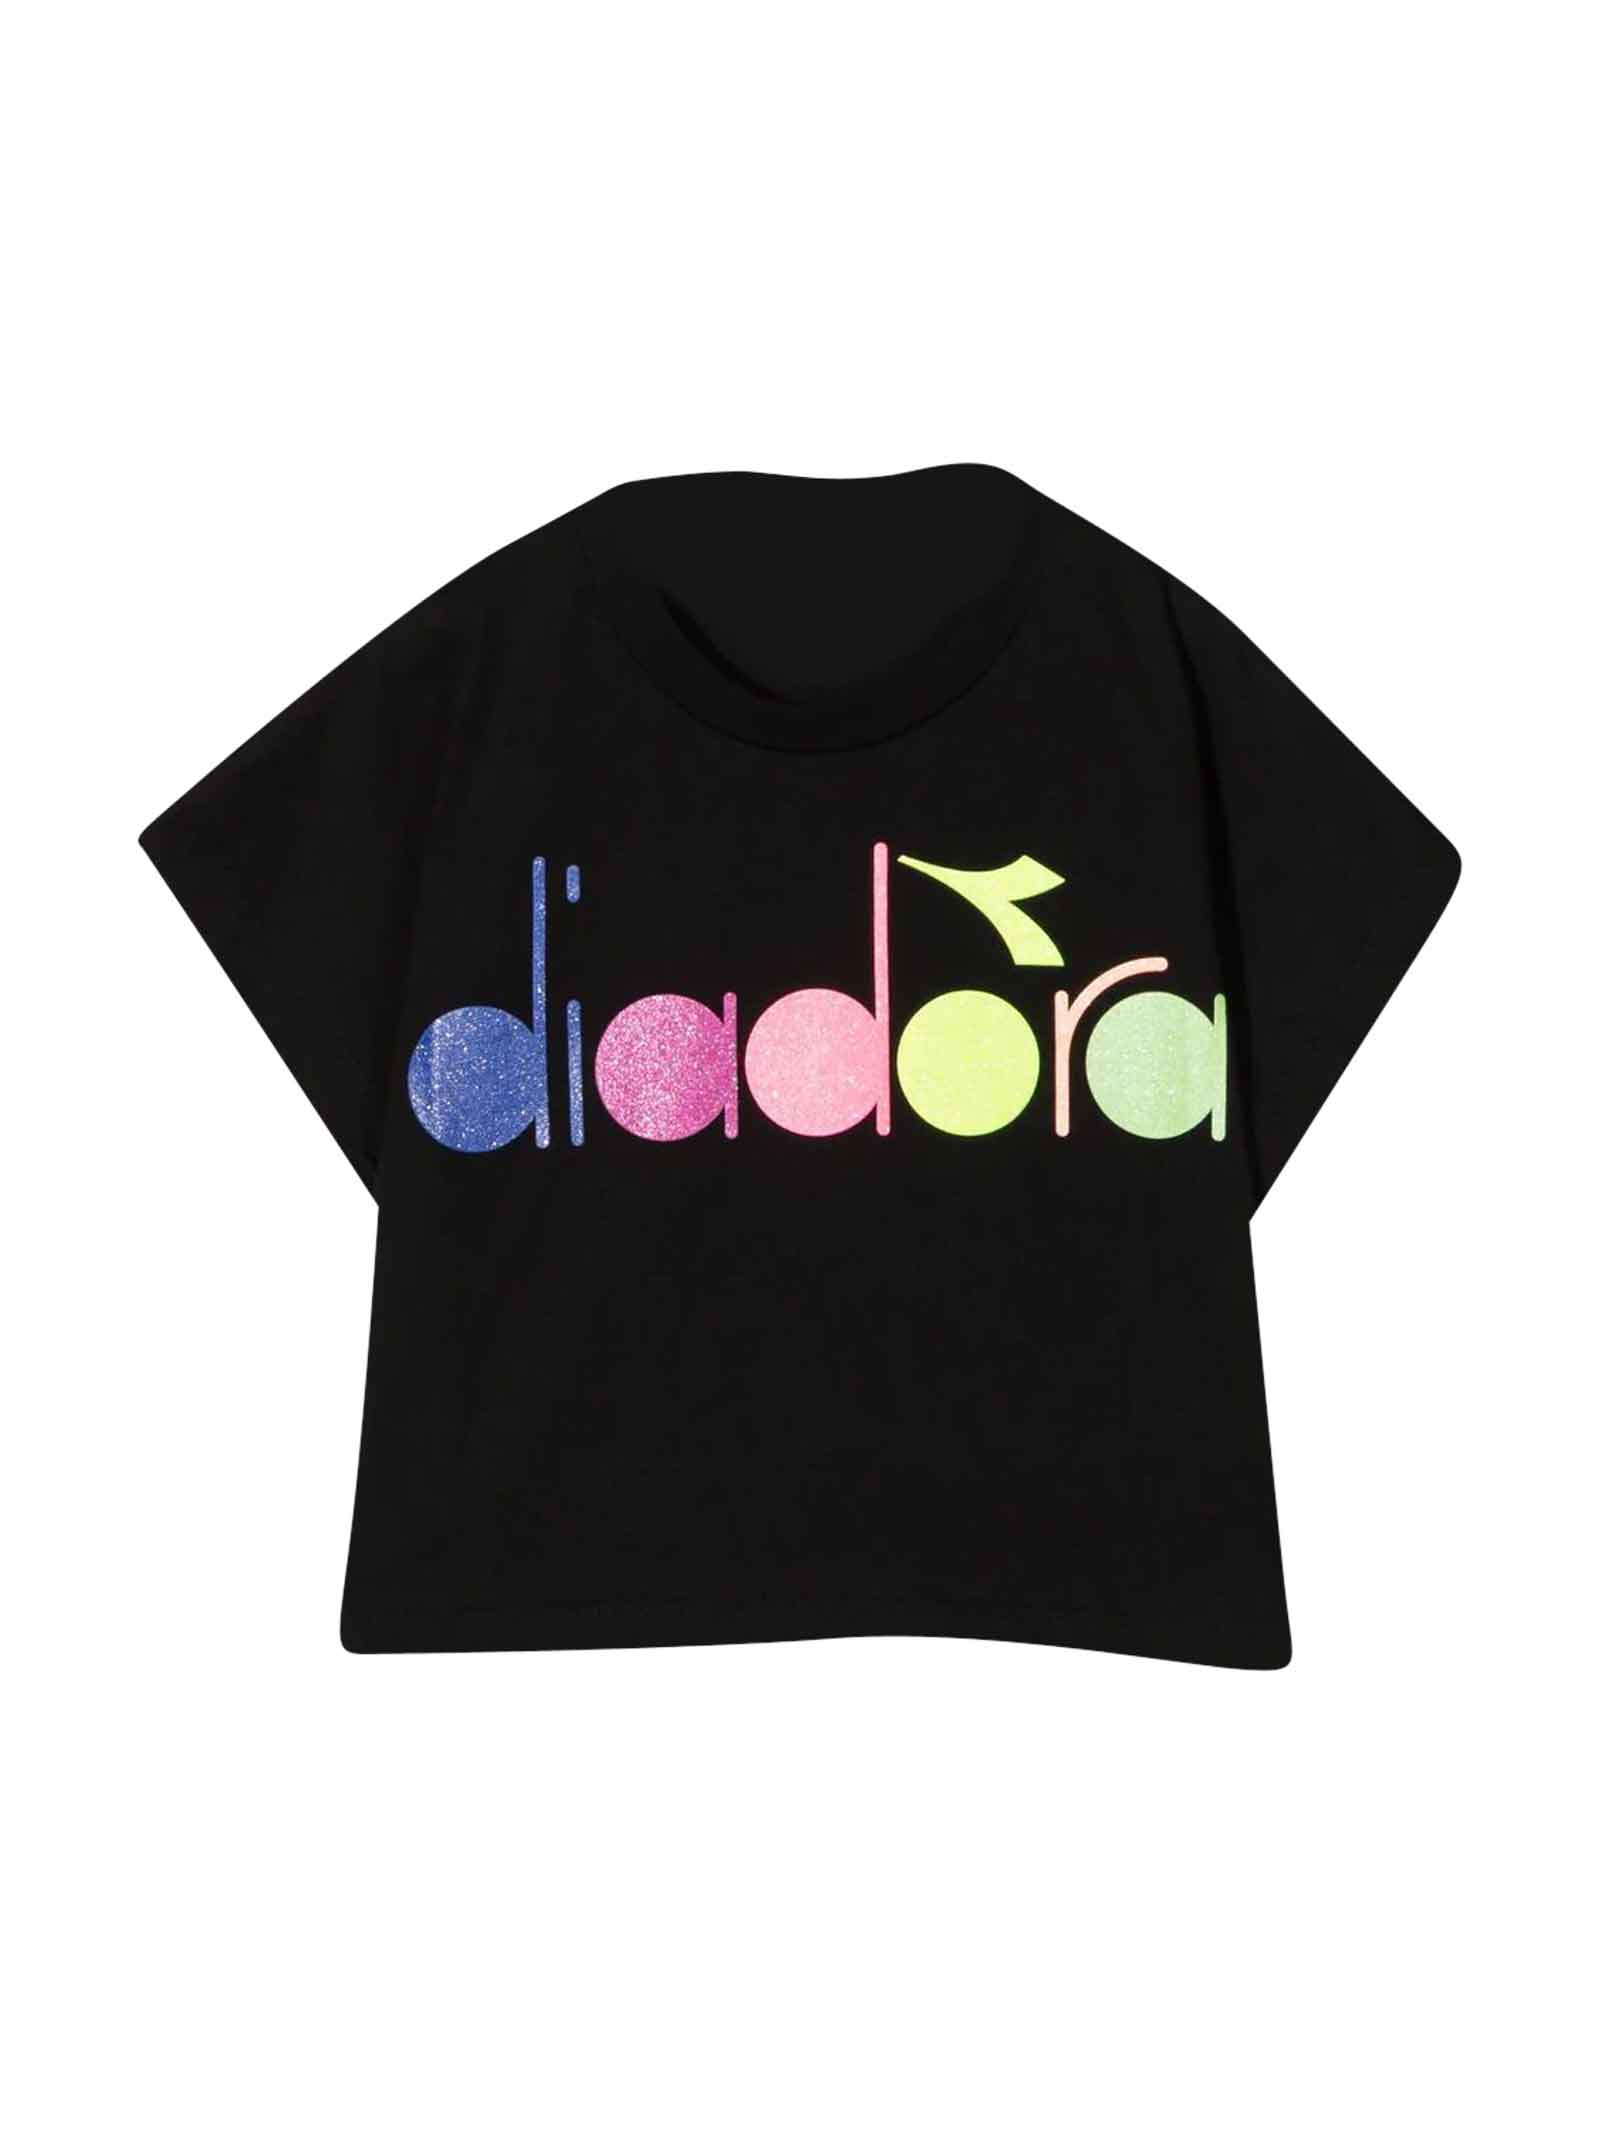 Diadora Black T-shirt Girl